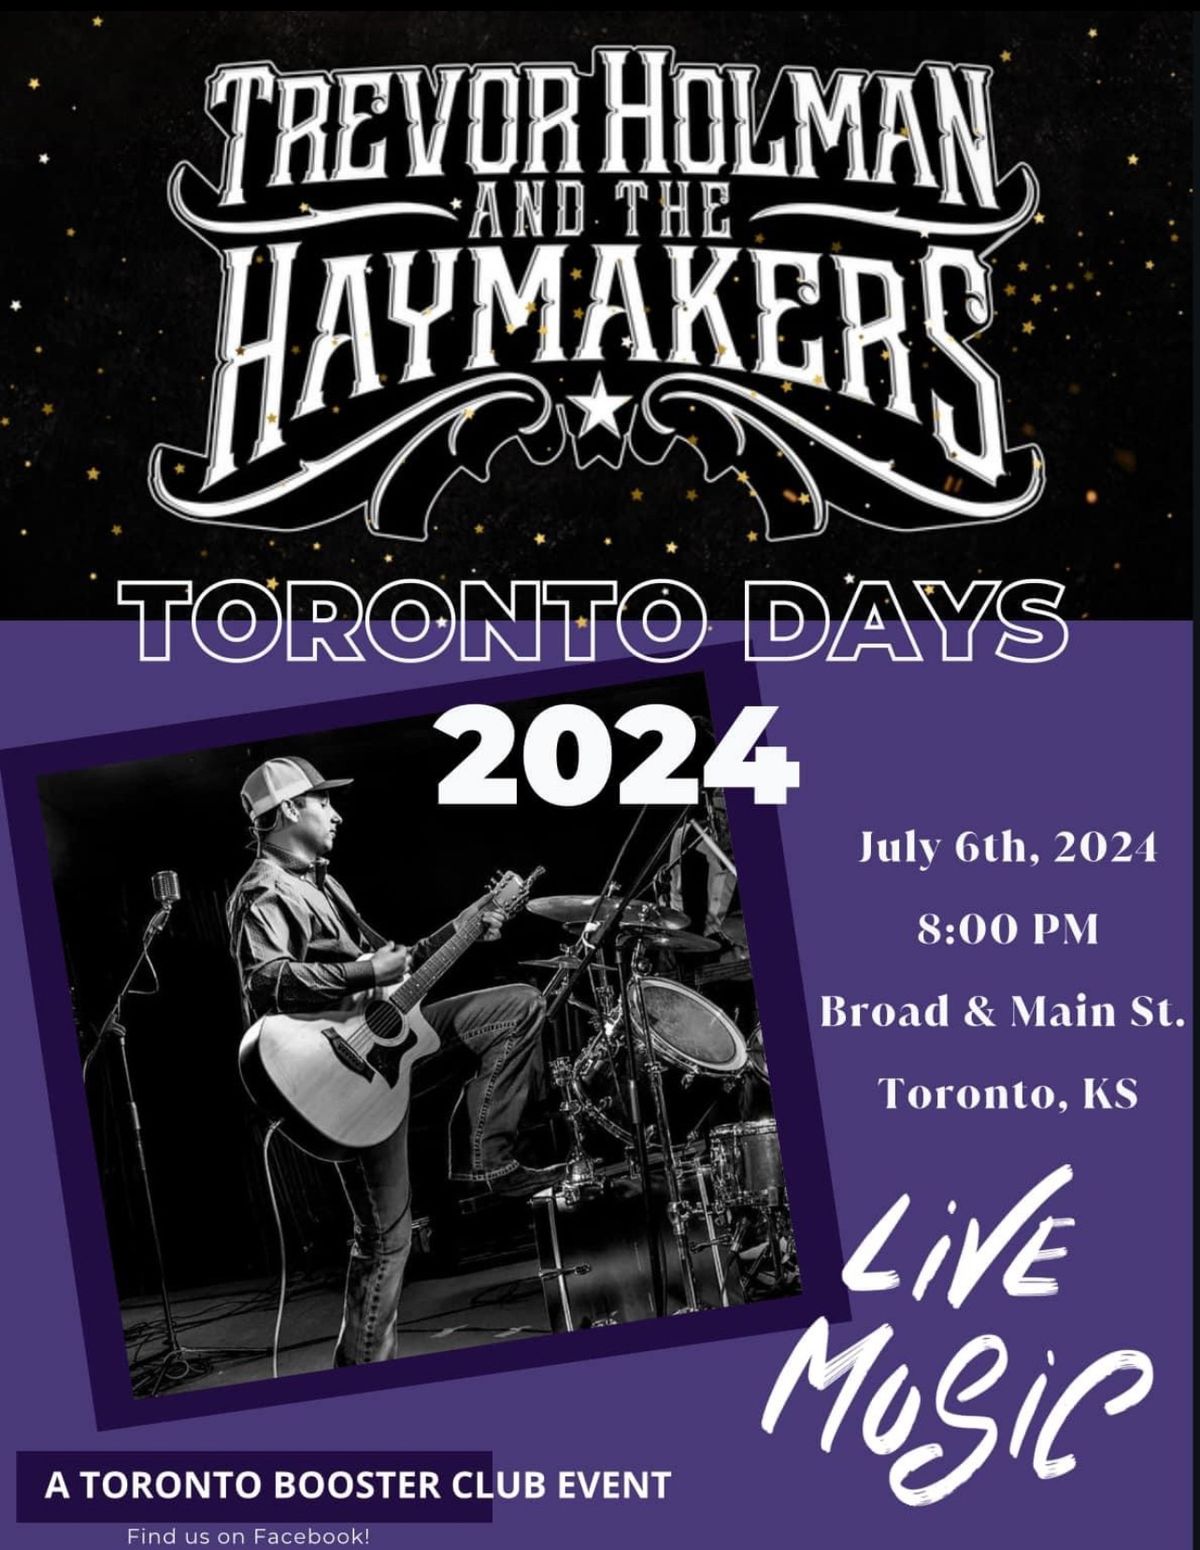 Street Dance Toronto Days 2024 - Trevor Holman and The Haymakers